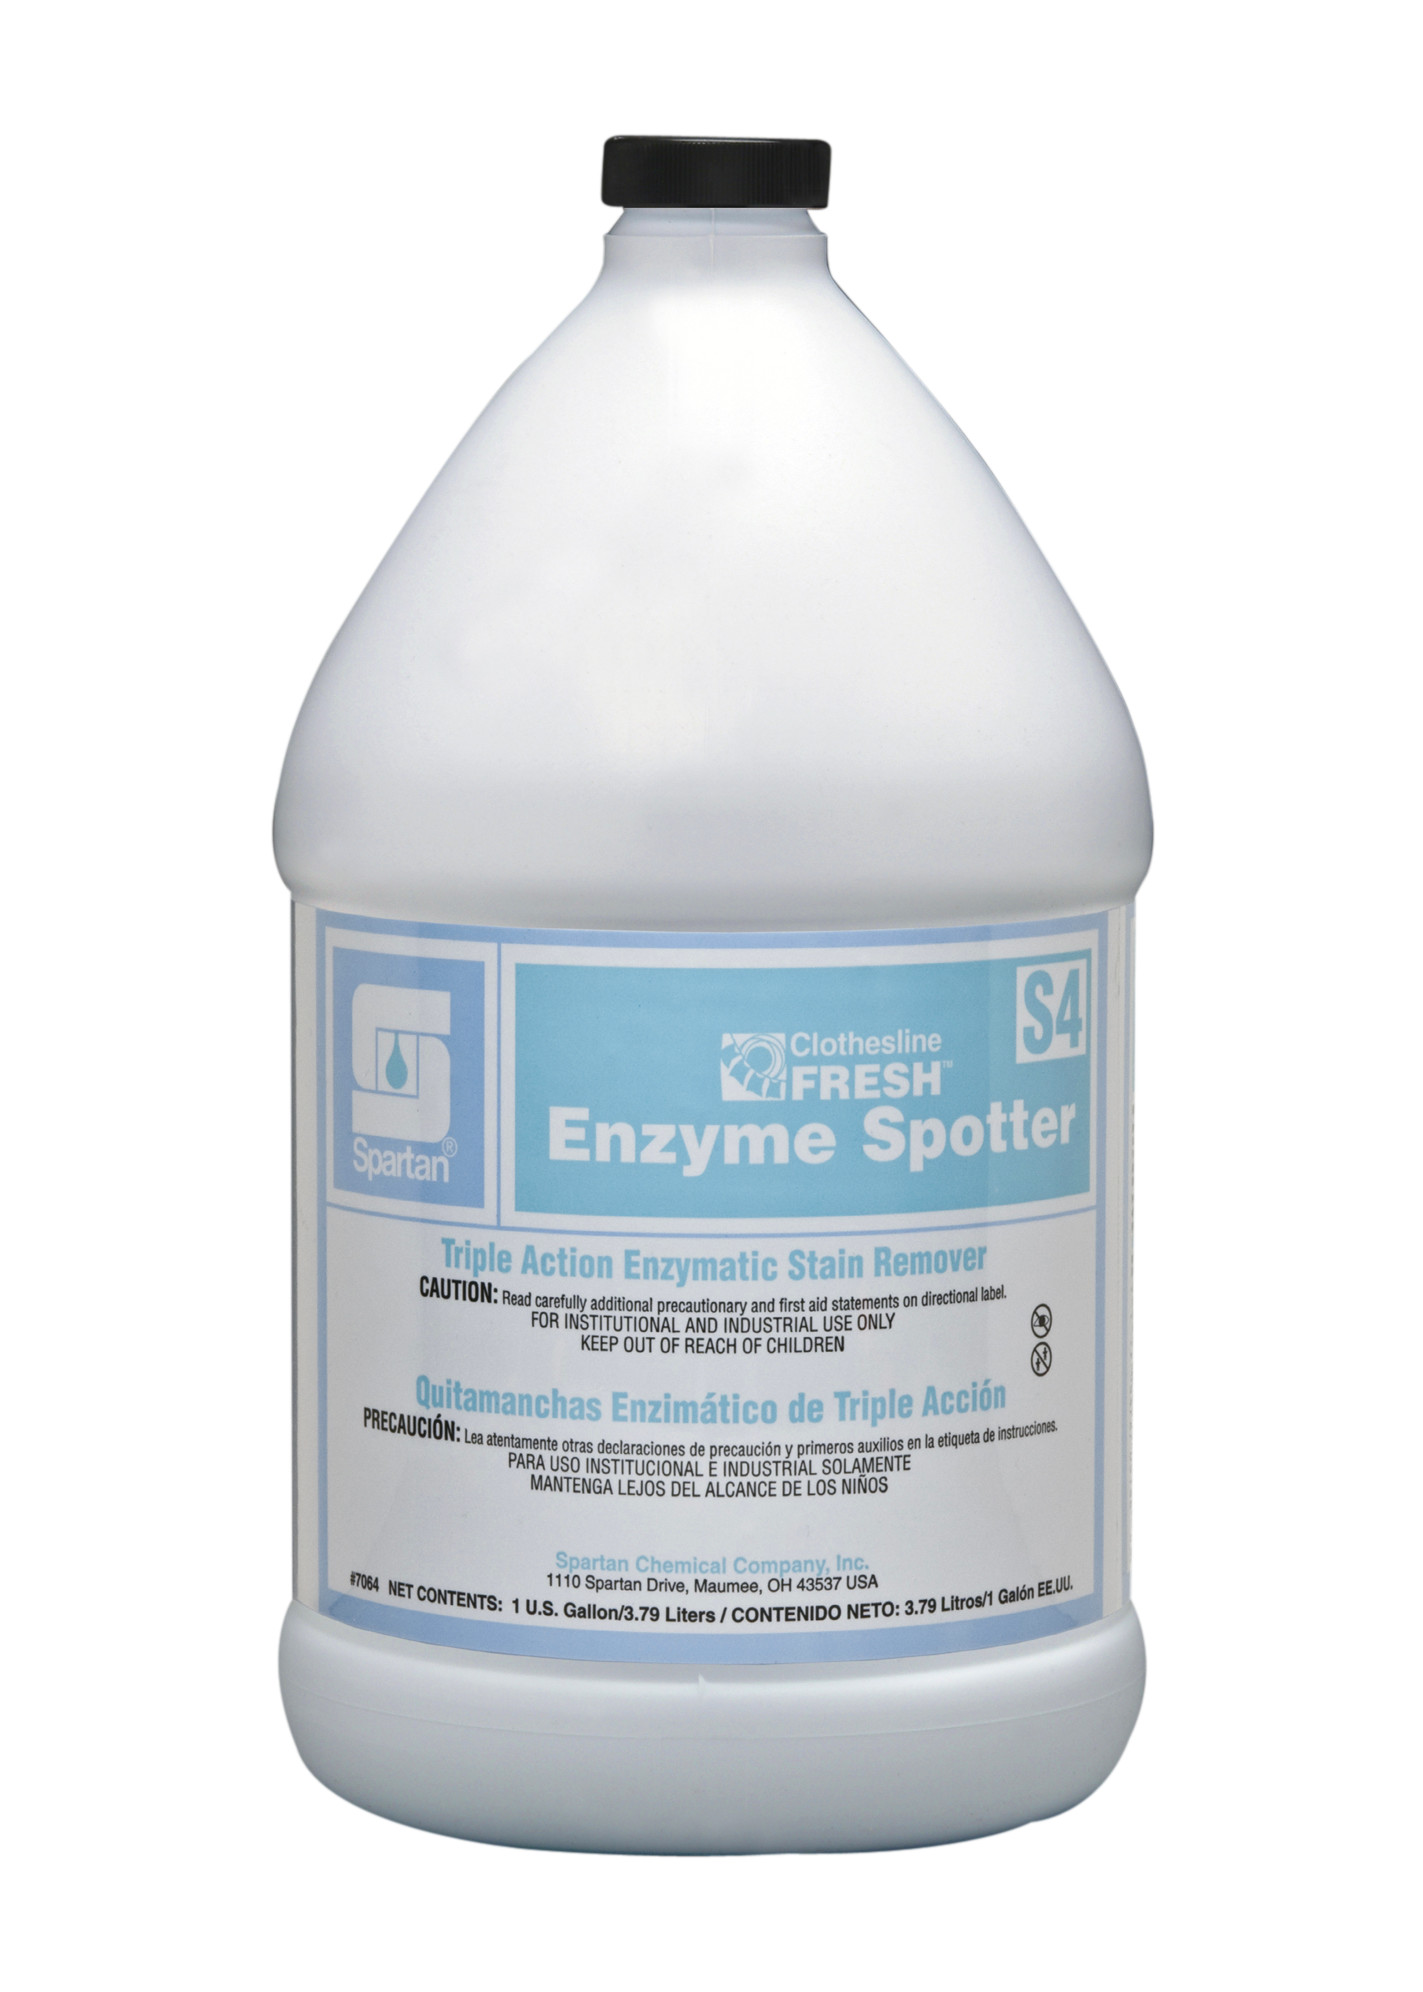 Spartan Chemical Company Clothesline Fresh Enzyme Spotter S4, 1 GAL 4/CSE